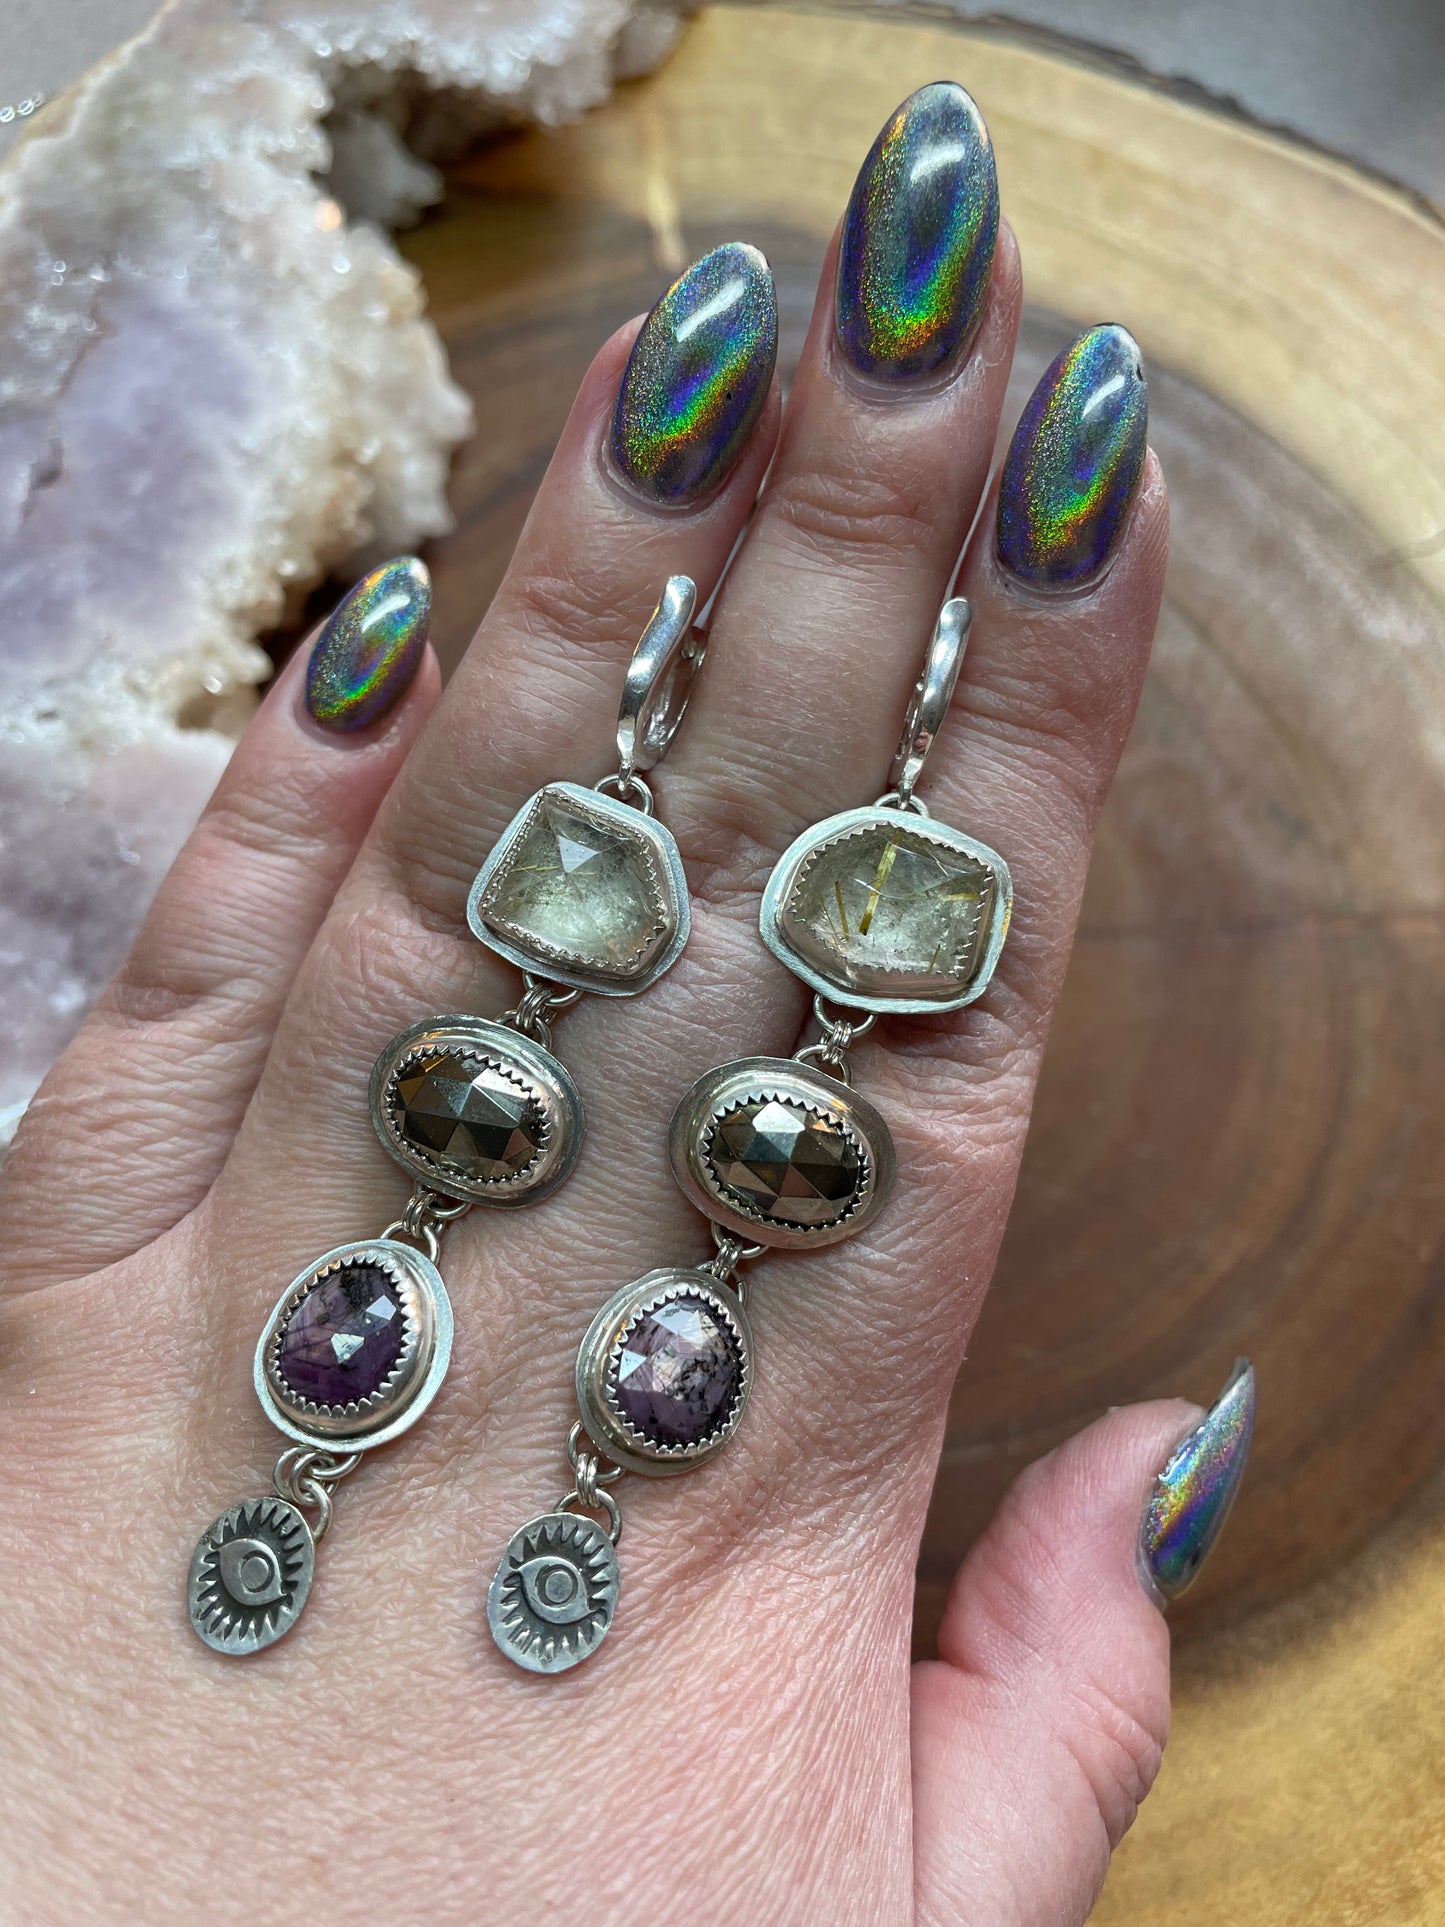 Stunning rutile quartz, sapphire, pyrite earrings